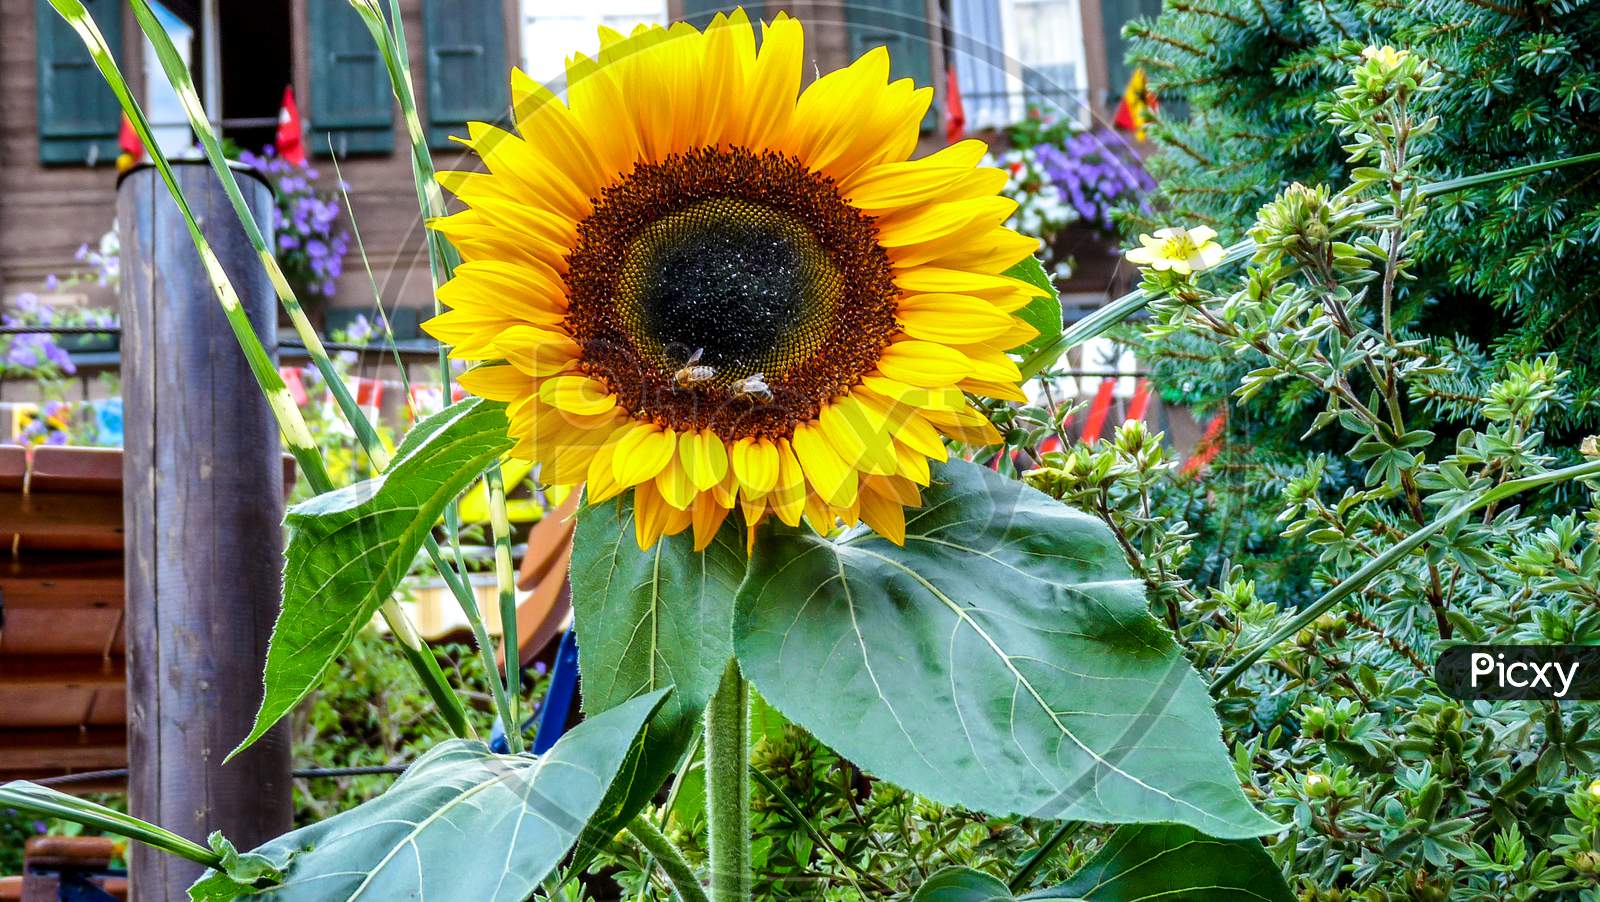 Switzerland, Lauterbrunnen, Close-Up Of Sunflower On Plant